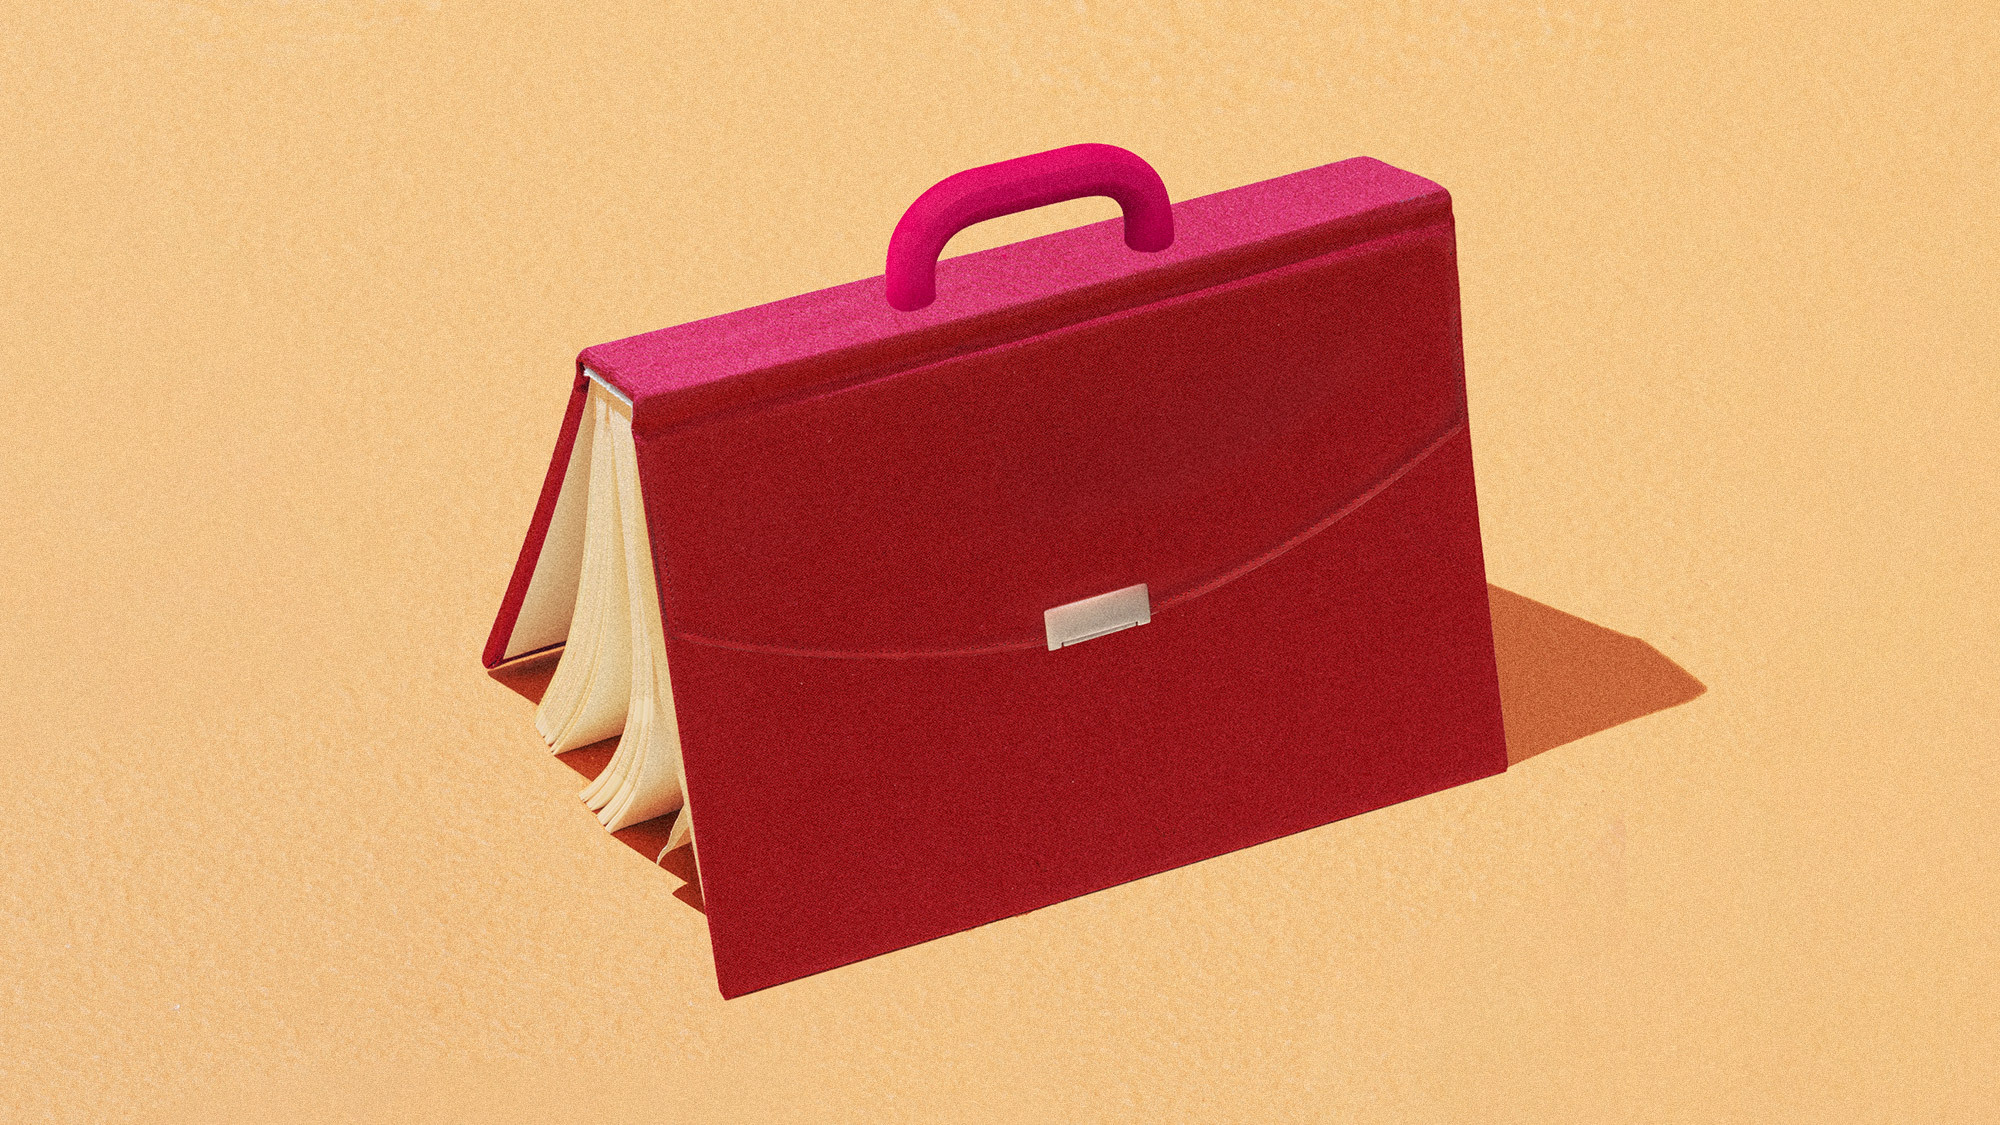 A briefcase that doubles as a book